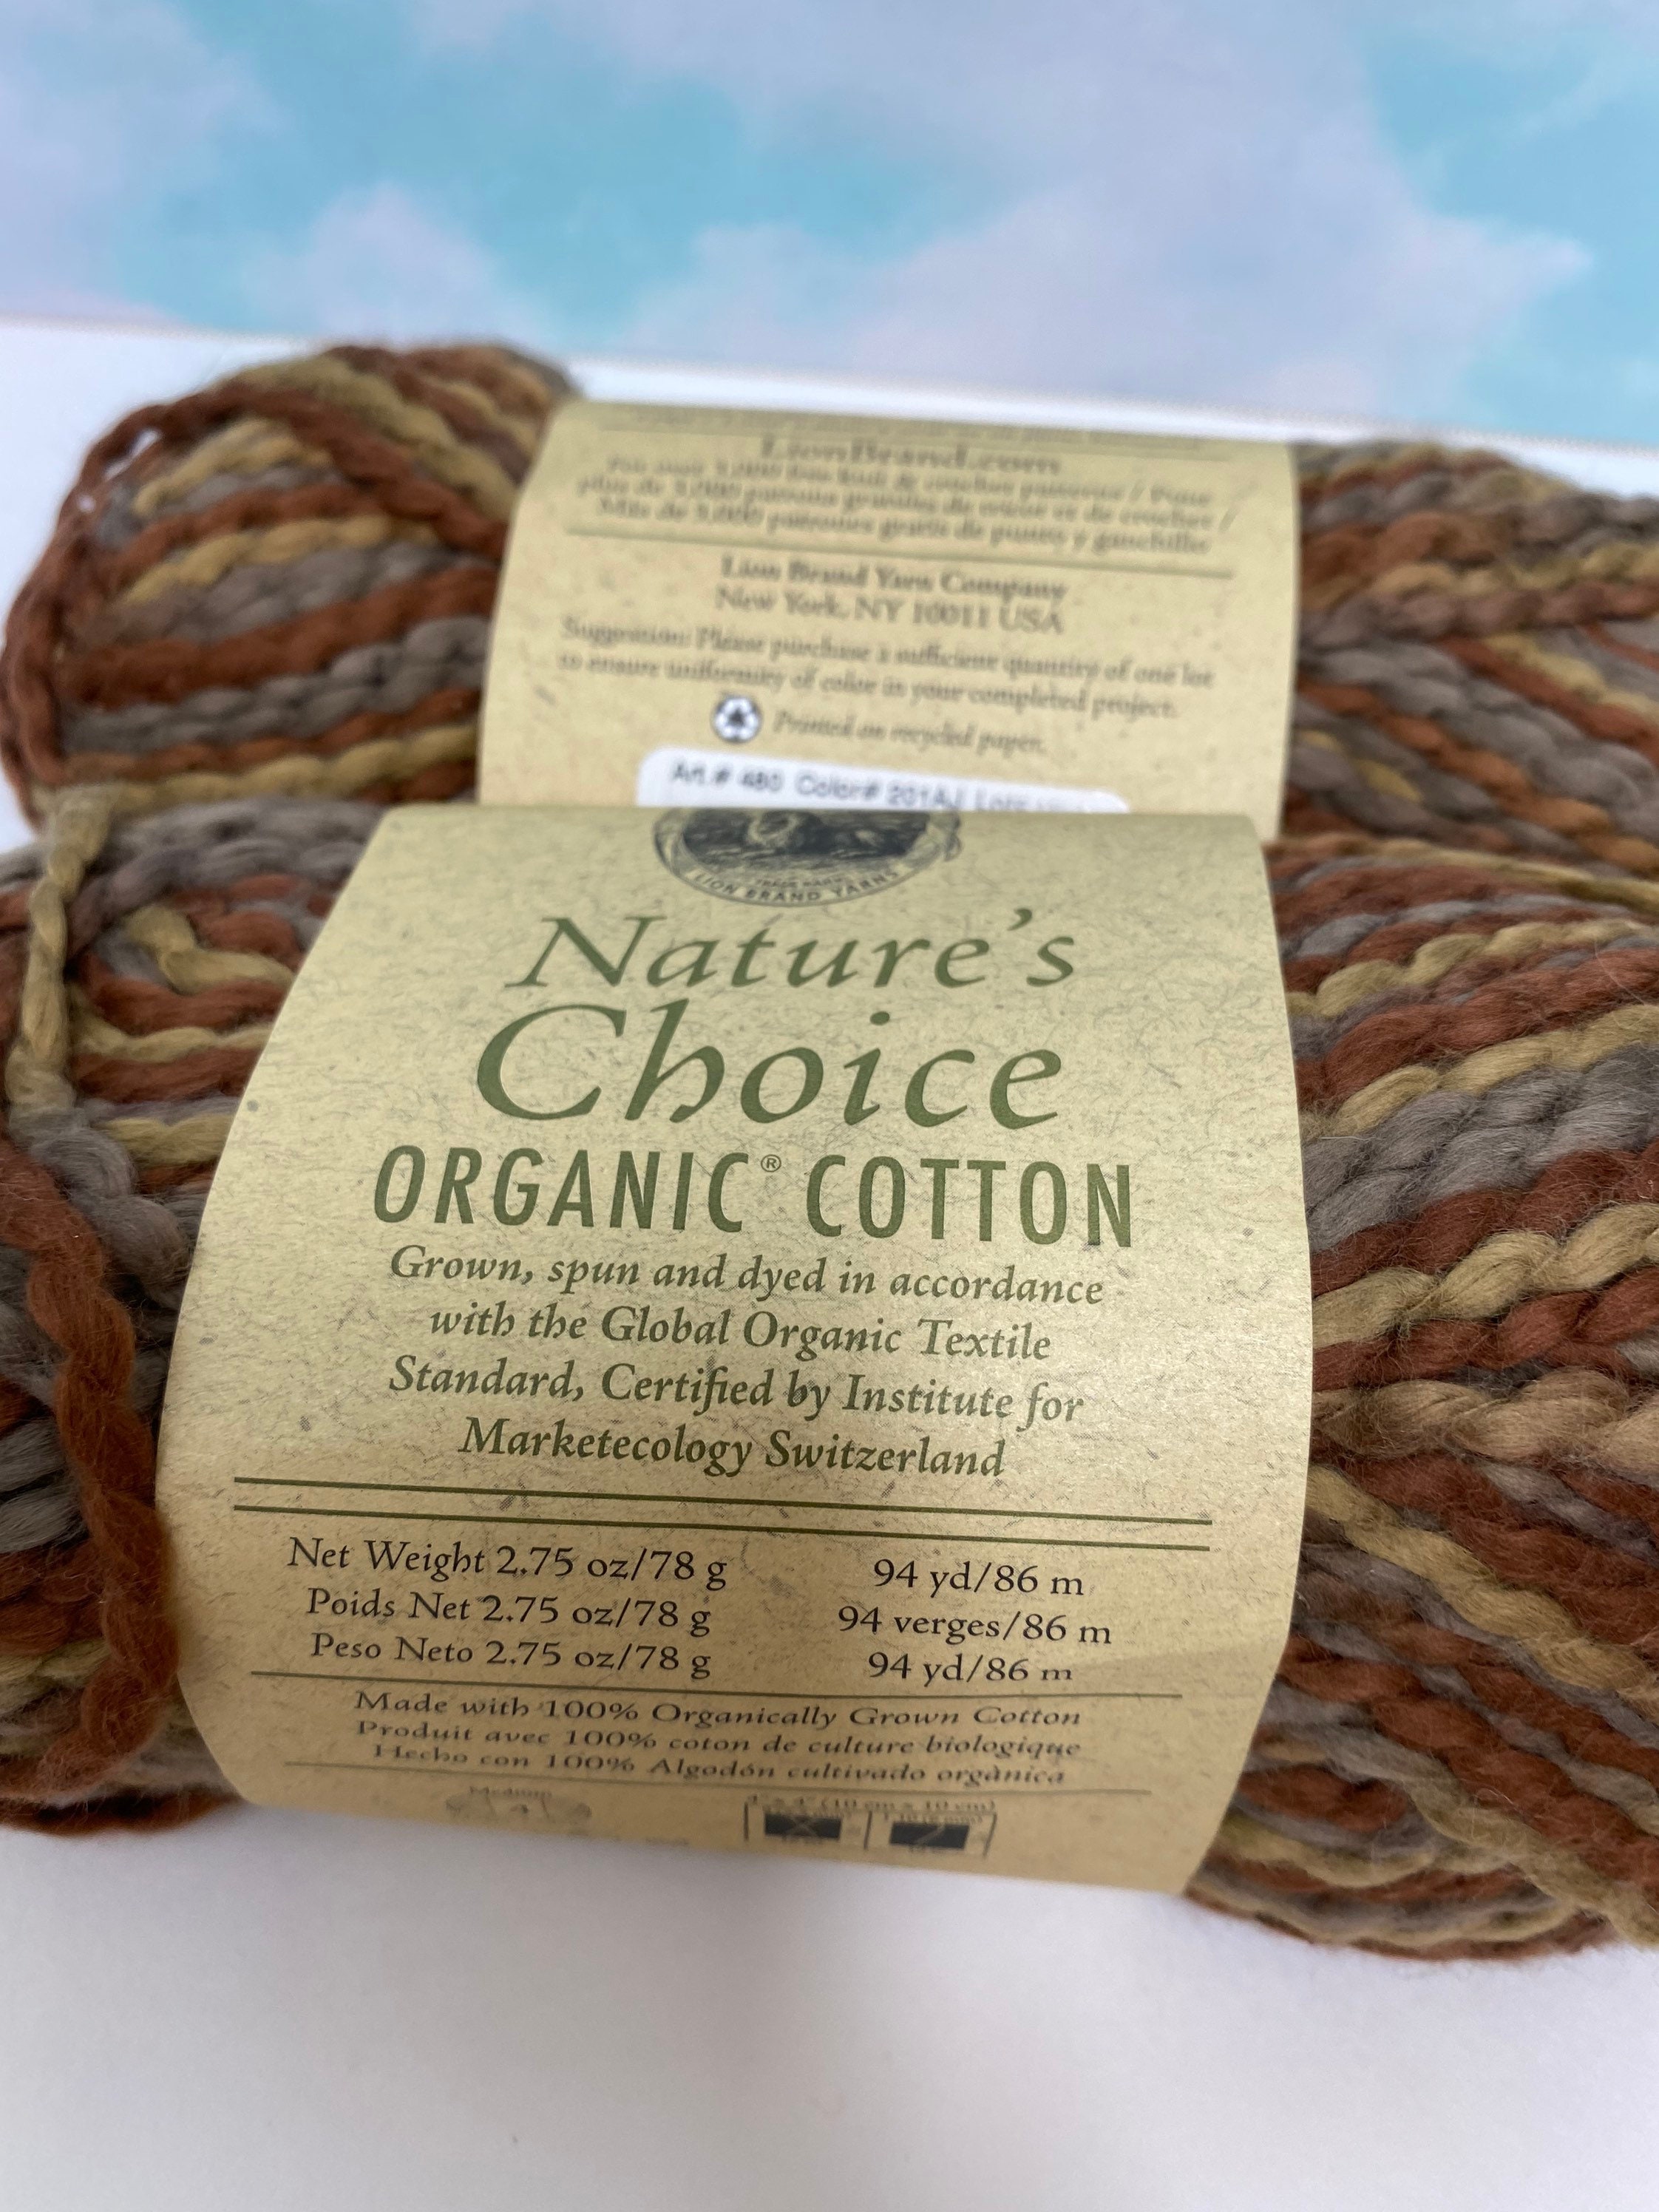 Lion Brand Yarn Organic Cotton, Soft and Bulky Yarn for Knitting